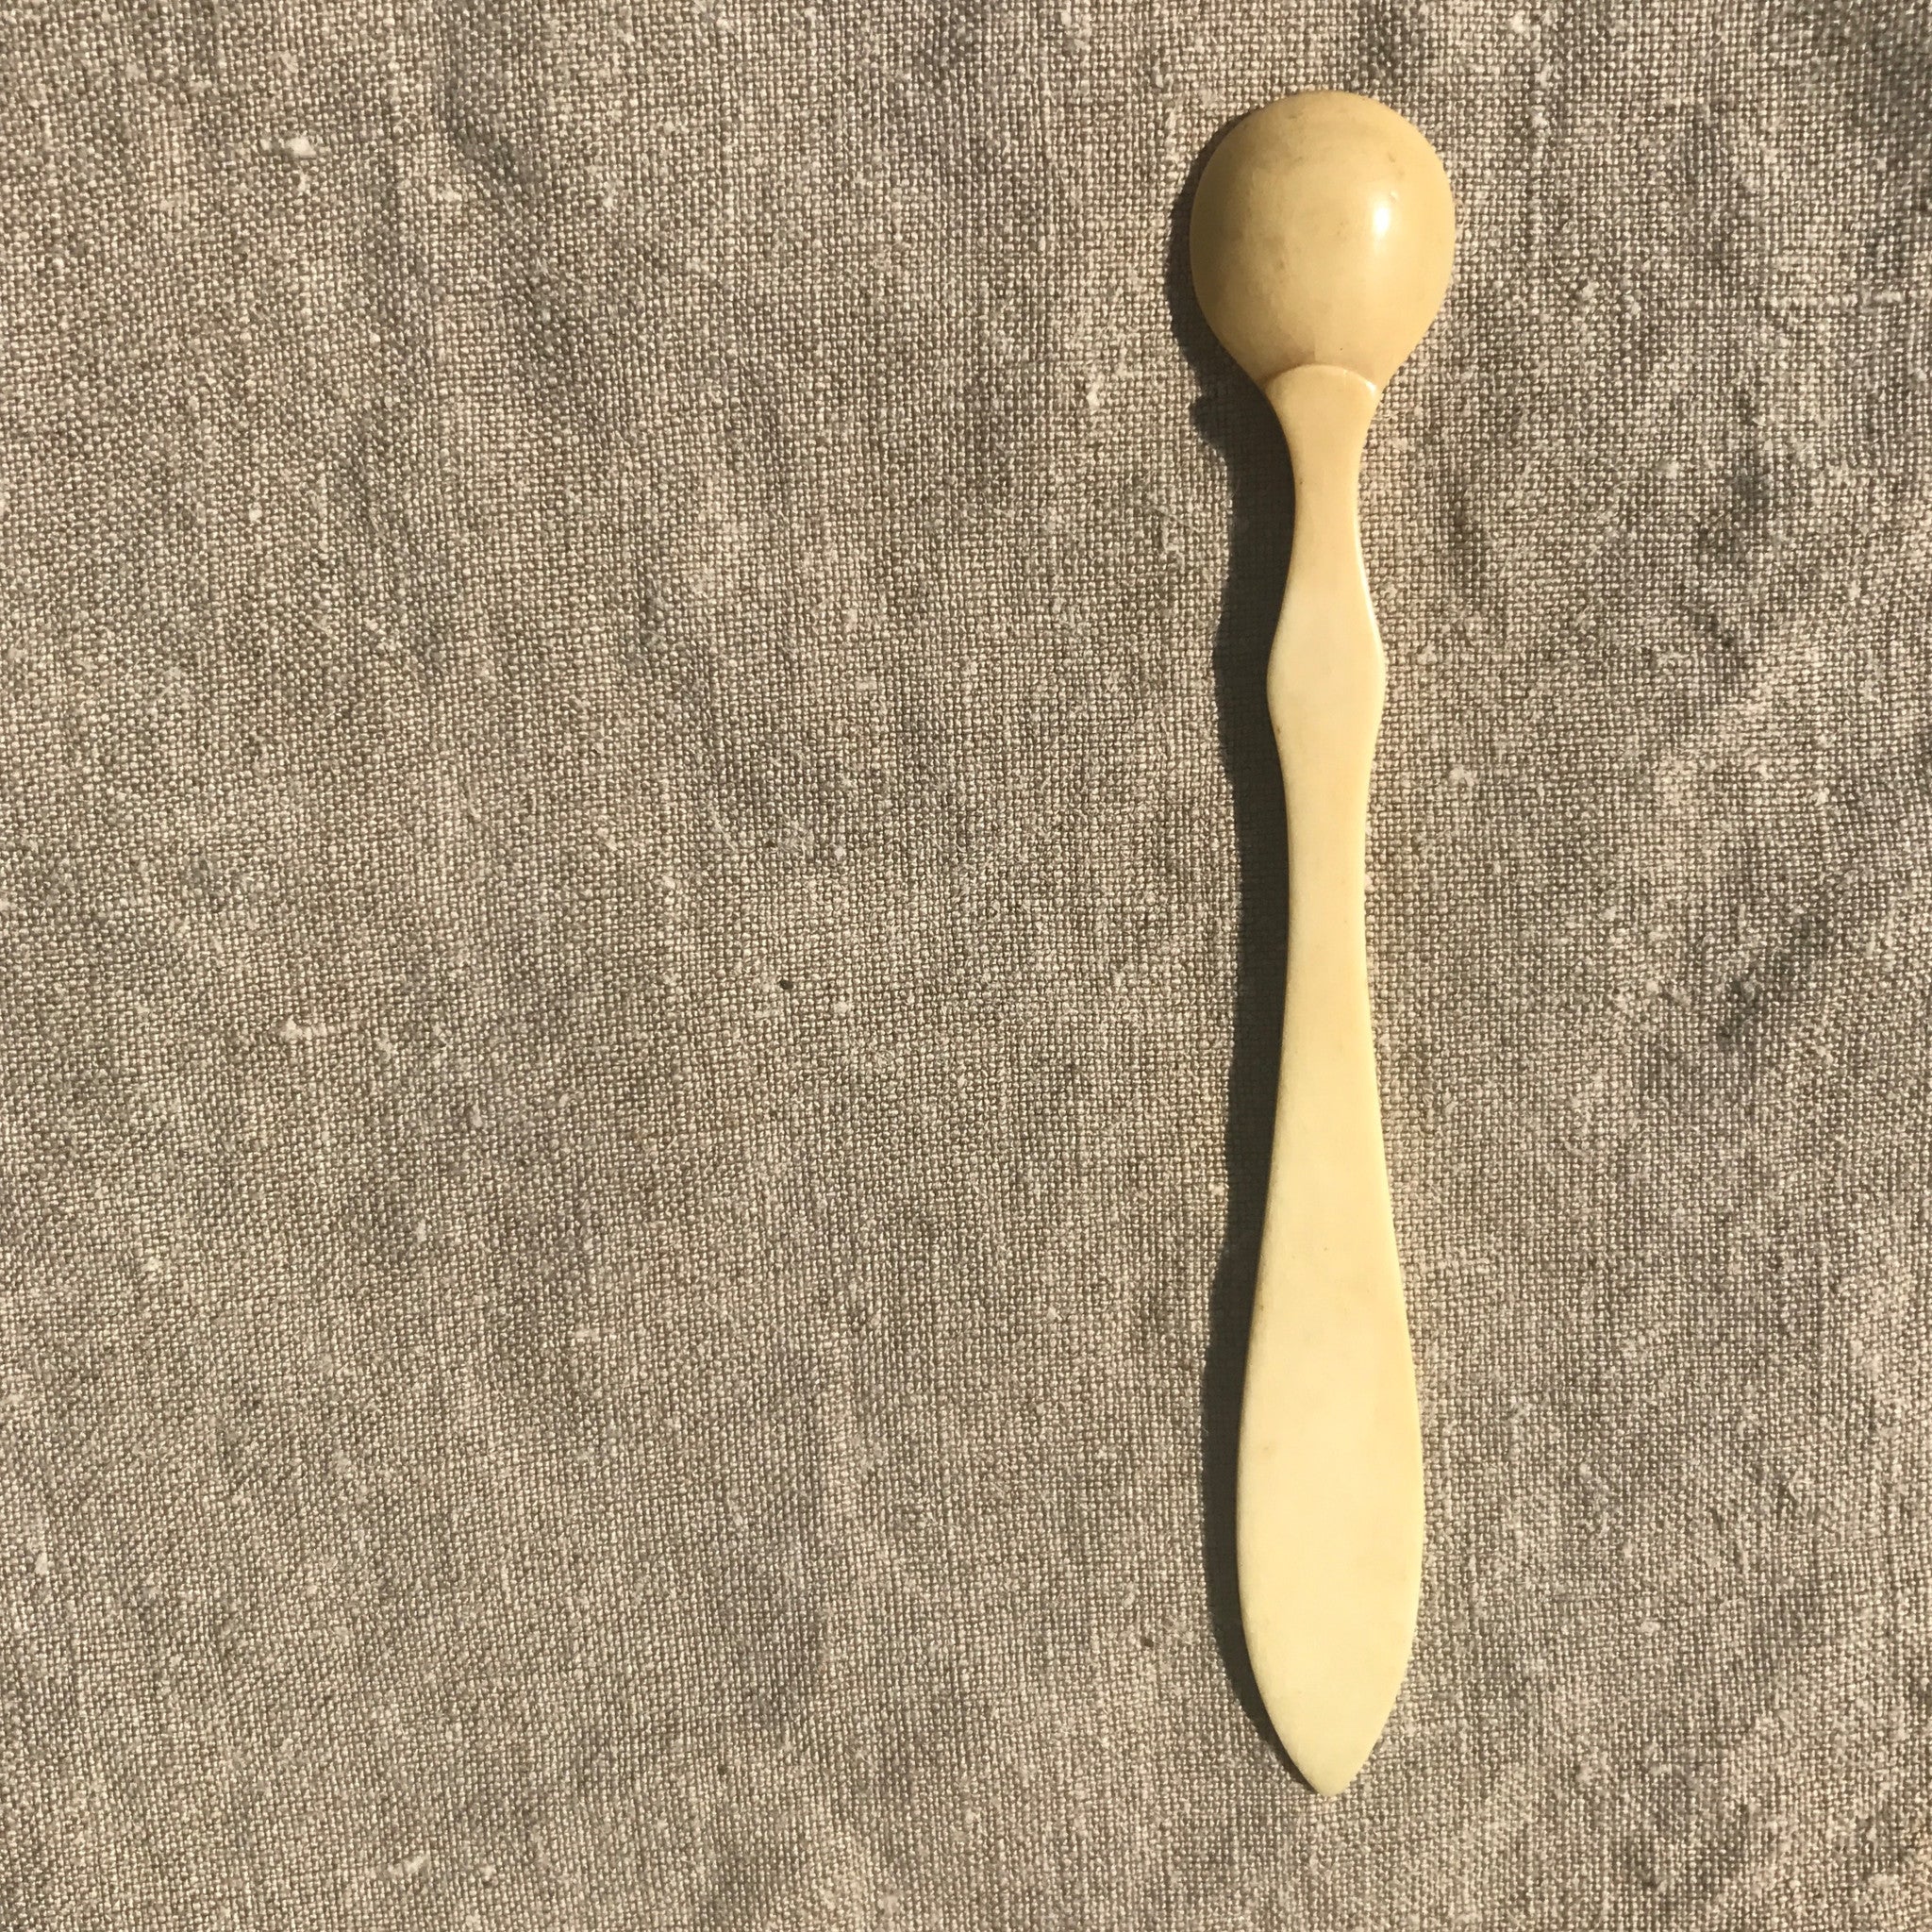 bone mustard scoop (4 of 5)